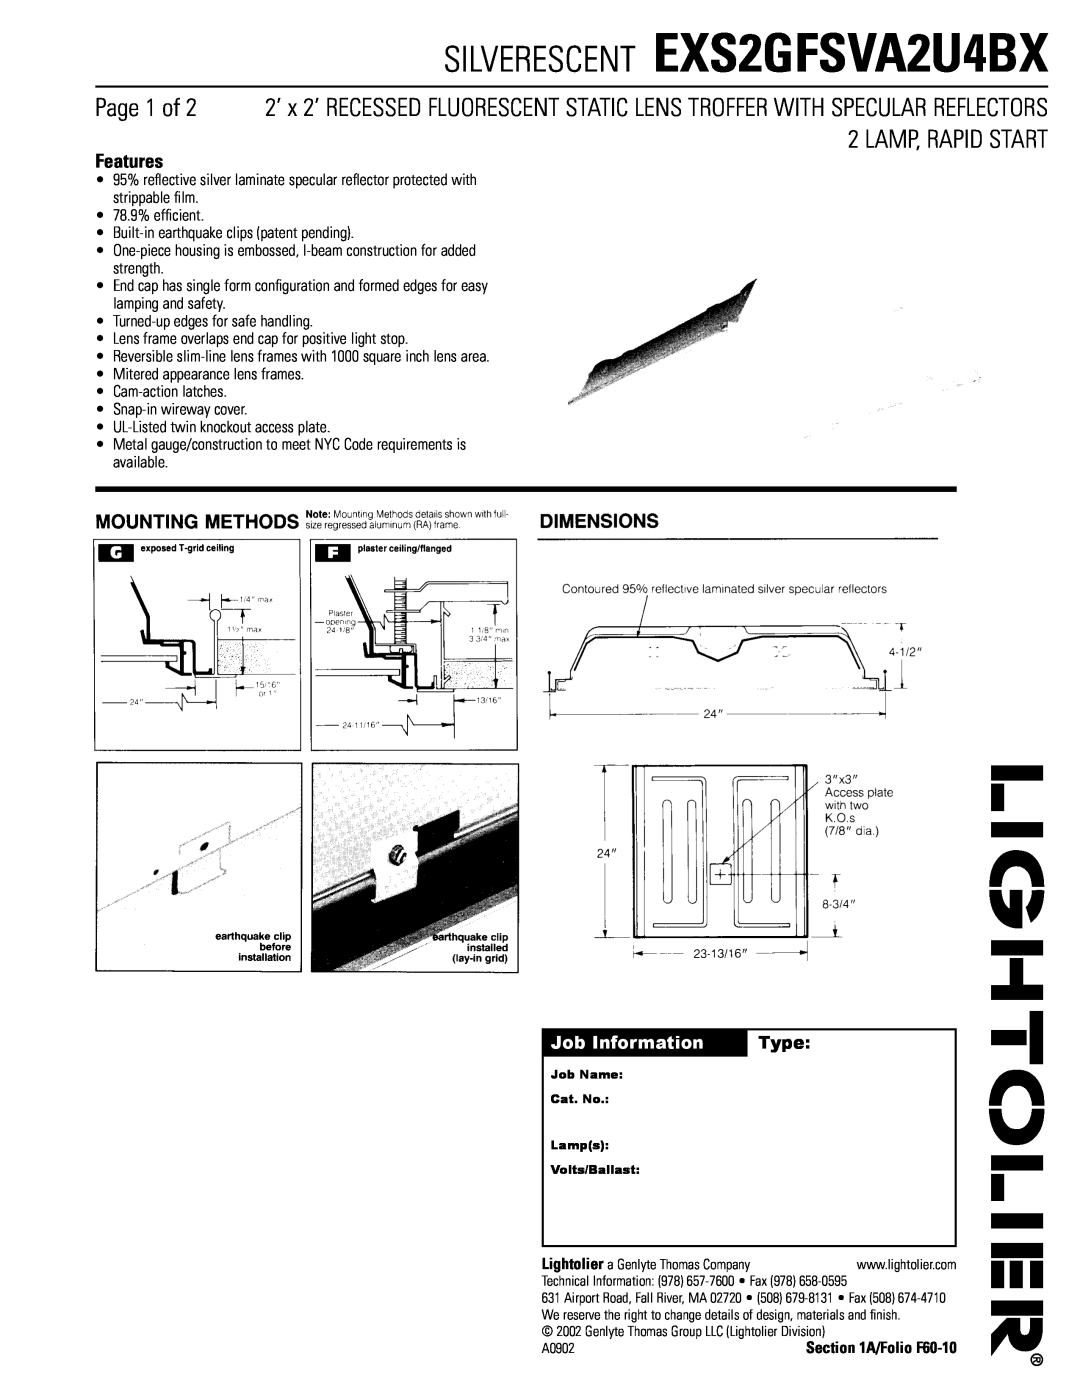 Lightolier manual SILVERESCENT EXS2GFSVA2U4BX, Features, Job Information, Type 